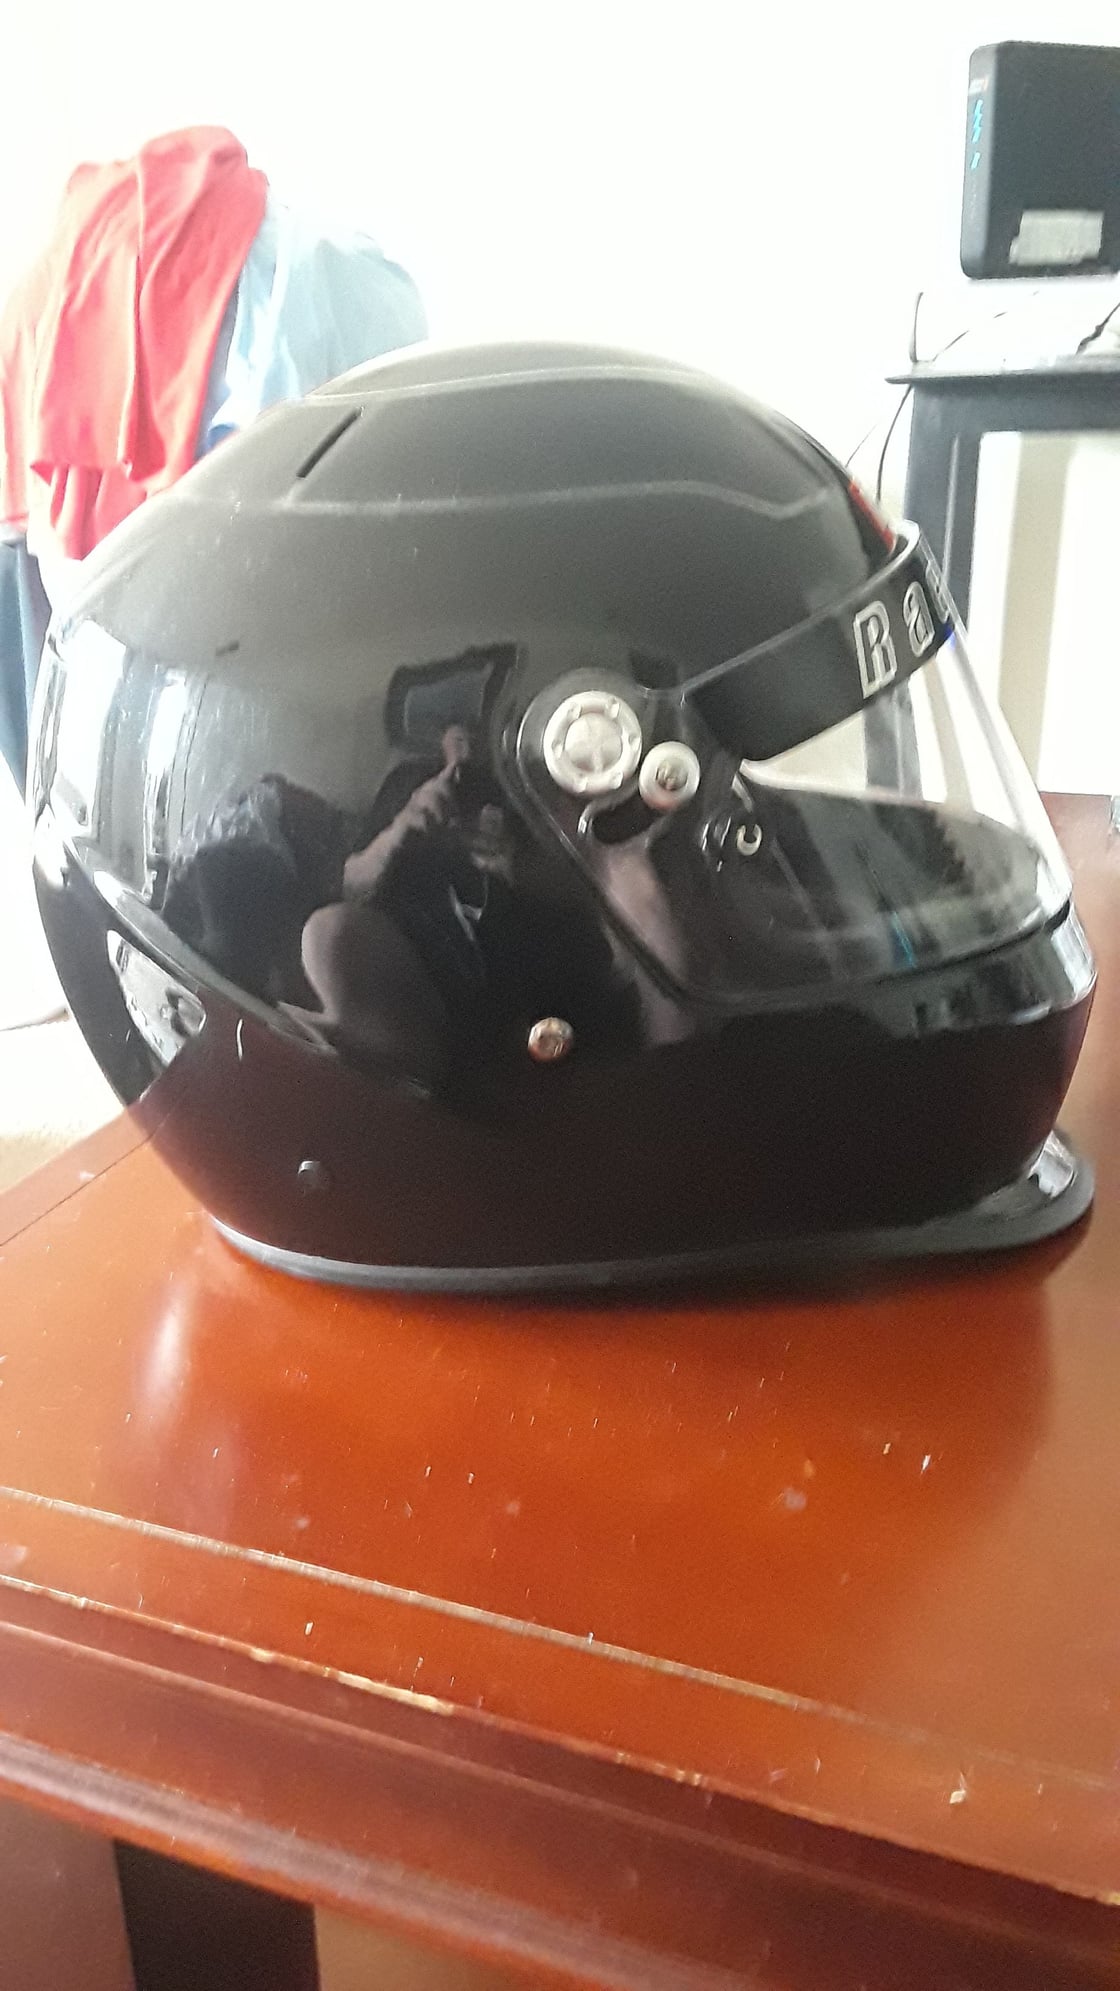  - Racequip 273005 SA2015 gloss black helmet Large - Greensboro, NC 27410, United States